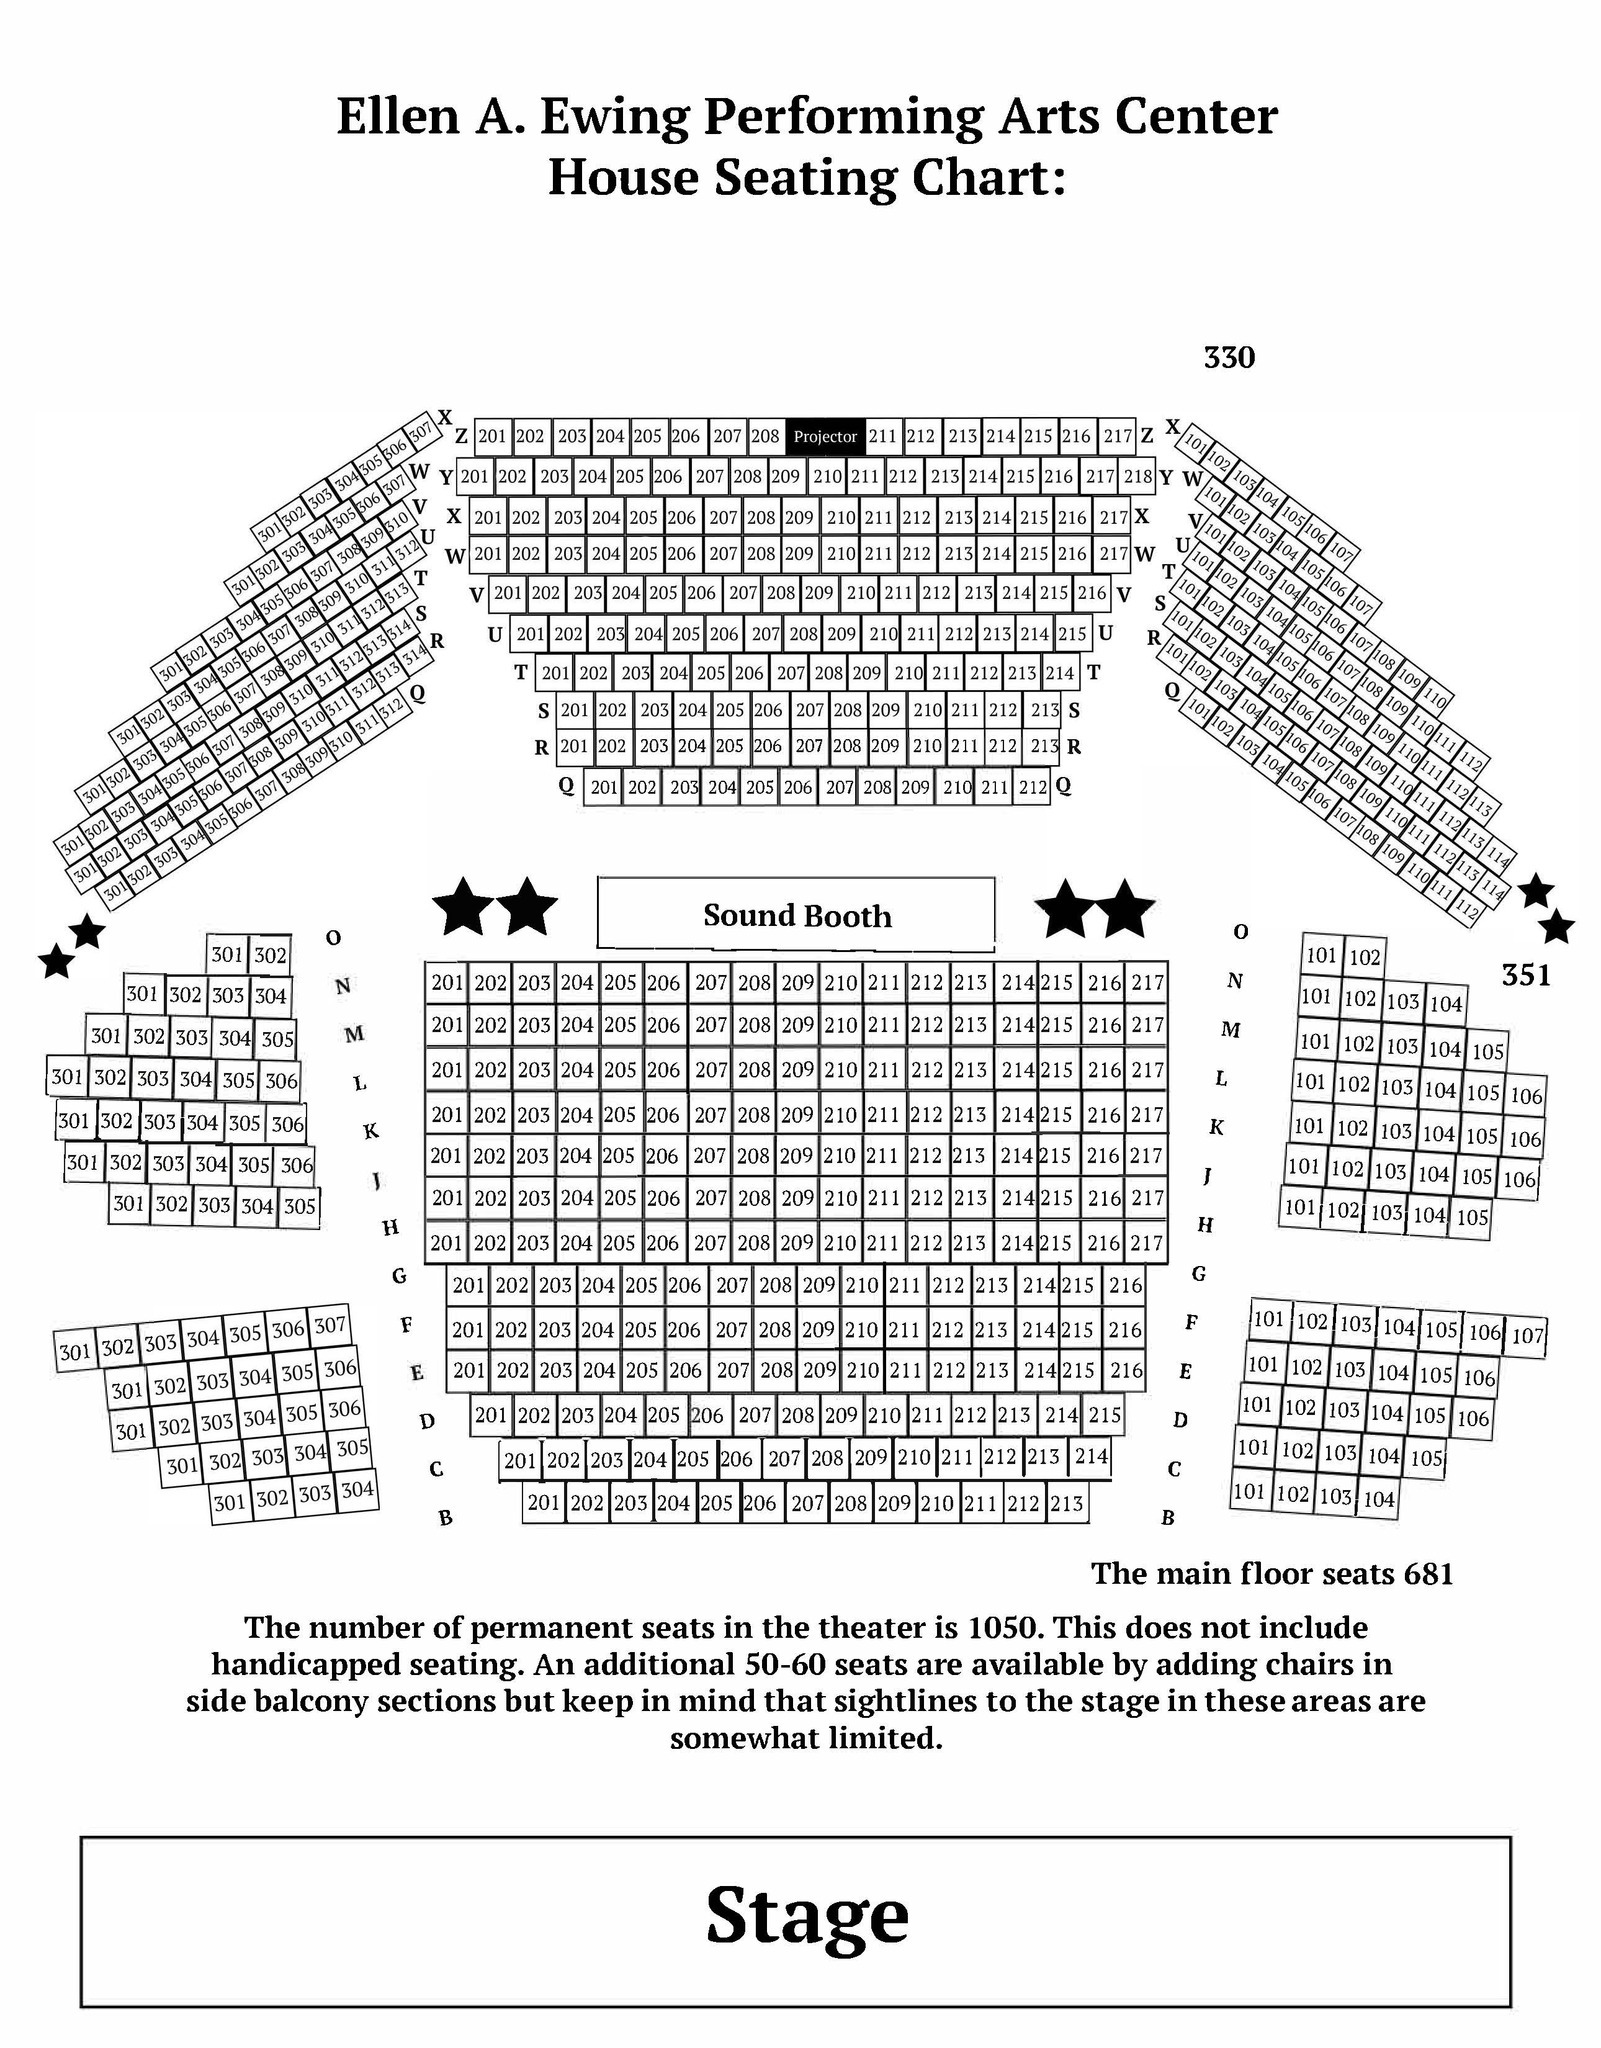 HS Auditorium Seating Chart